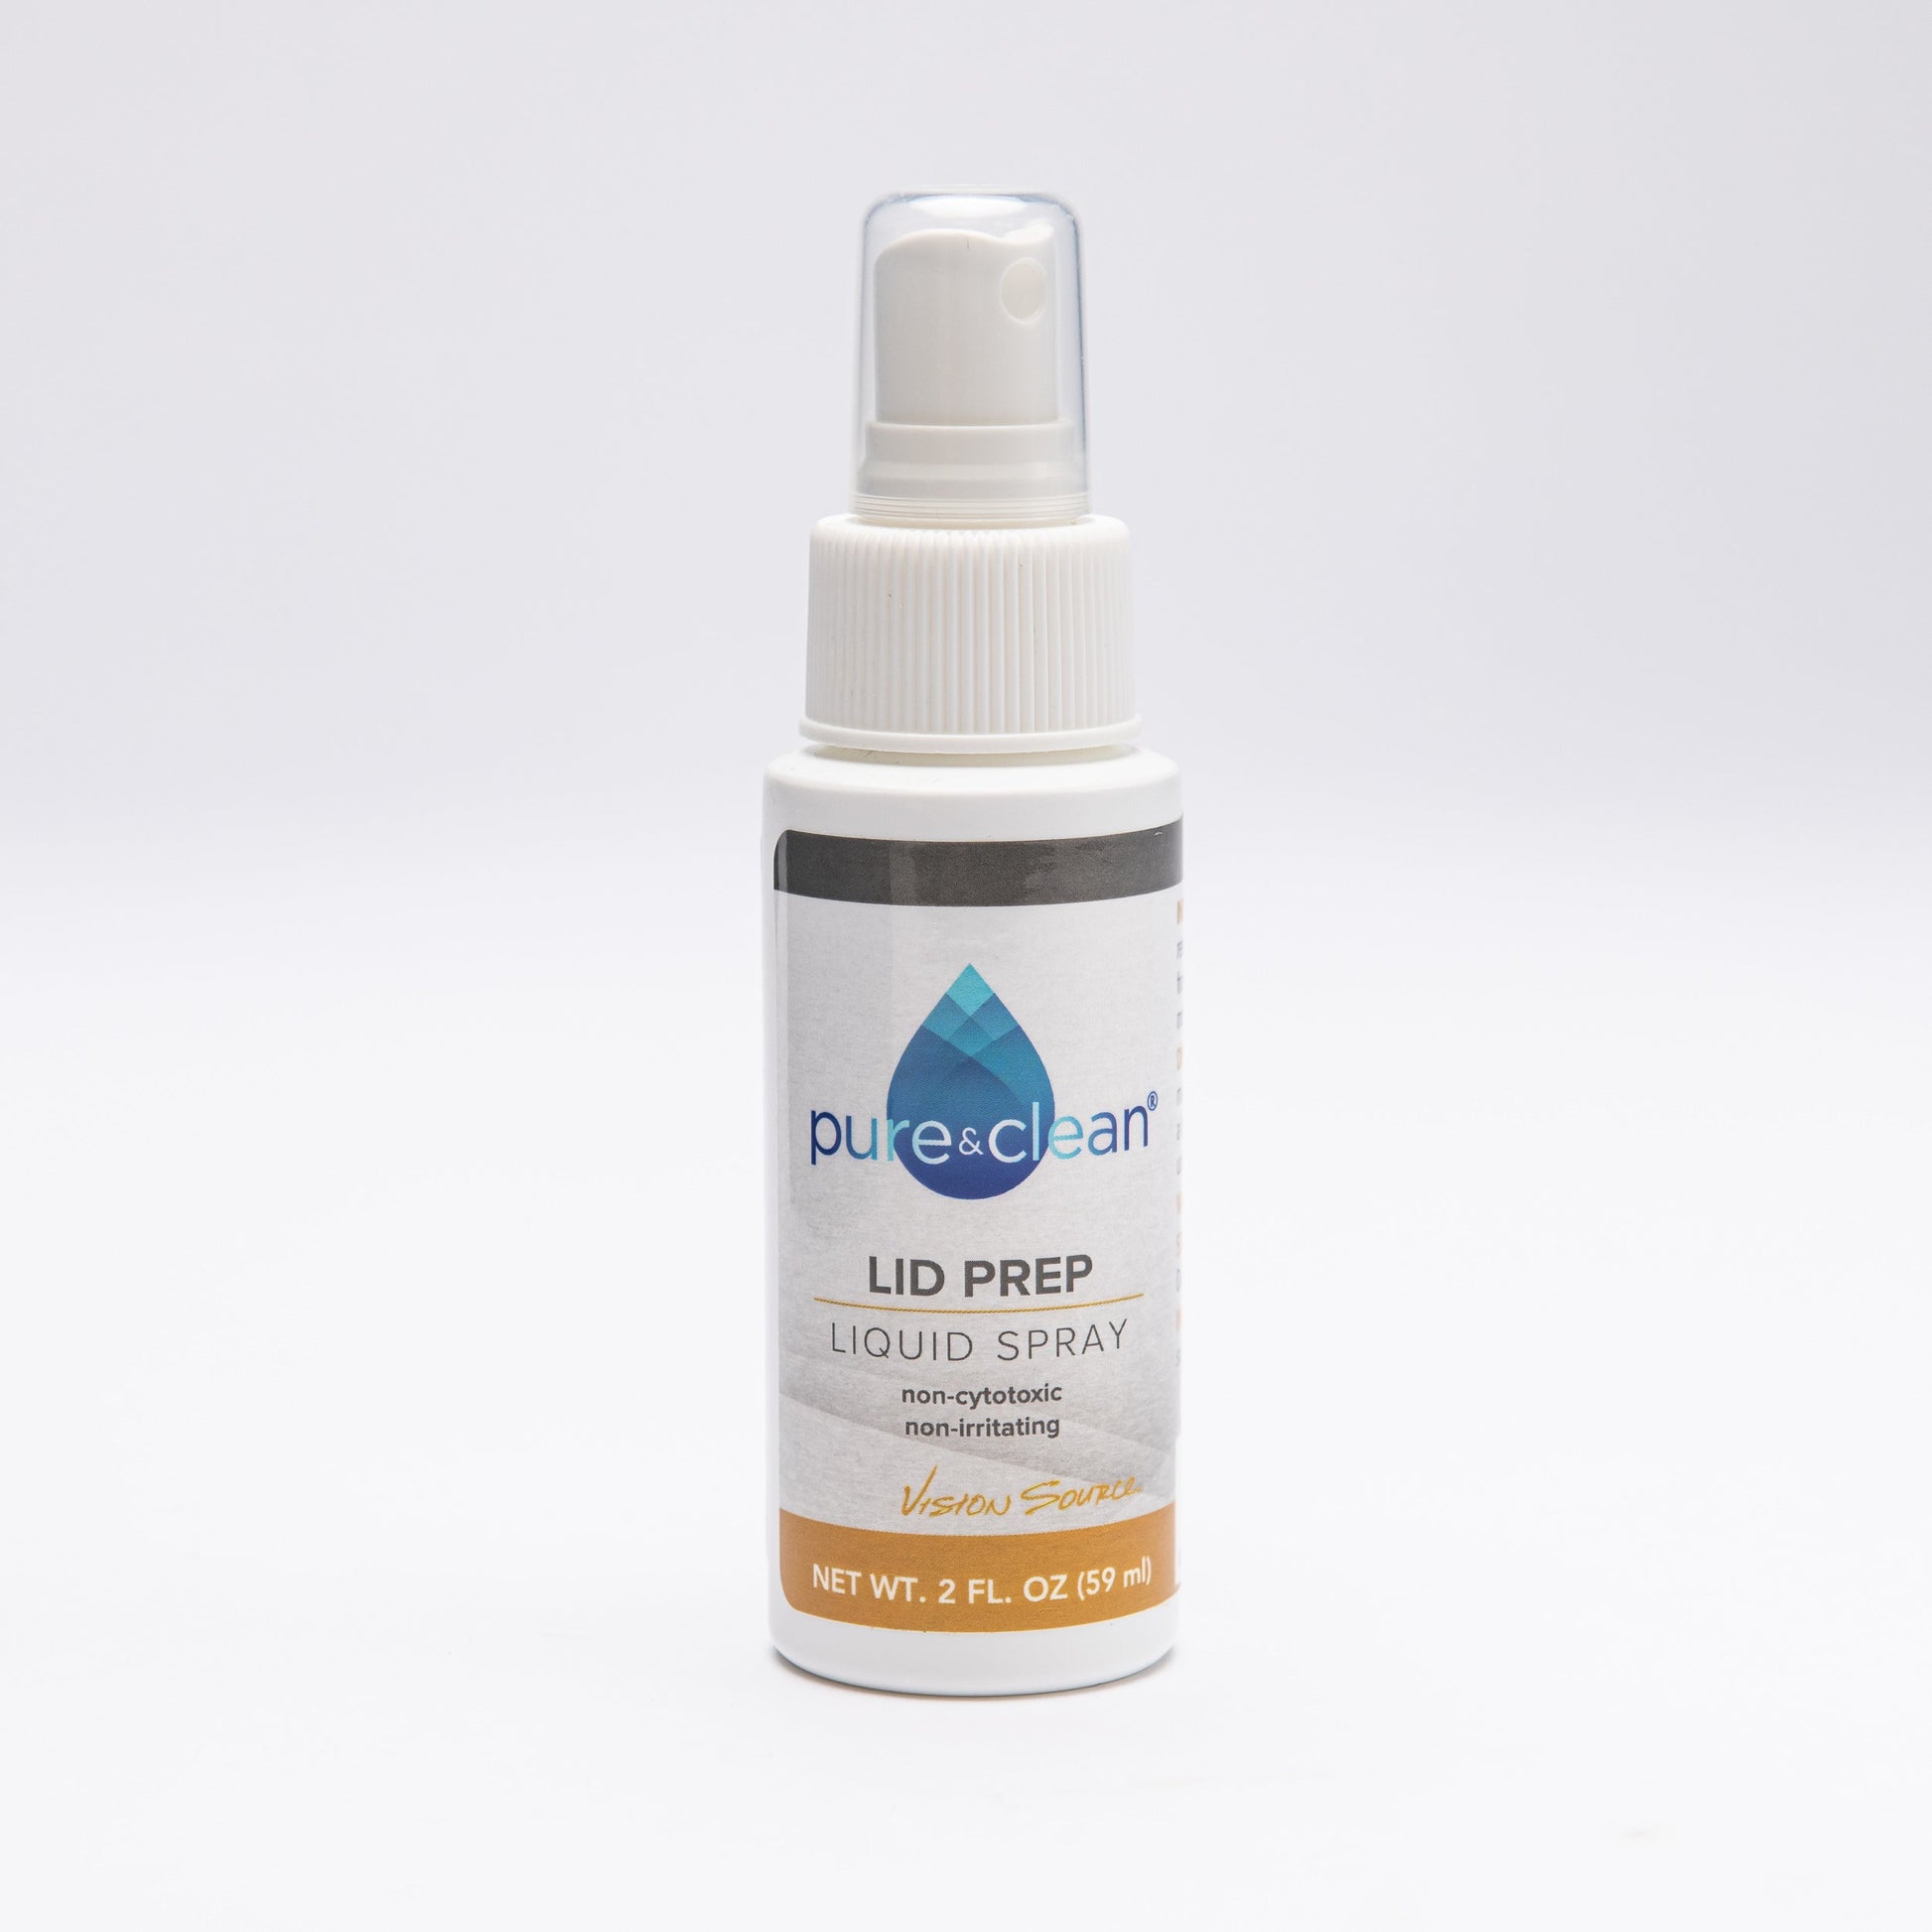 Pure&Clean Lid Prep Liquid Spray bottle